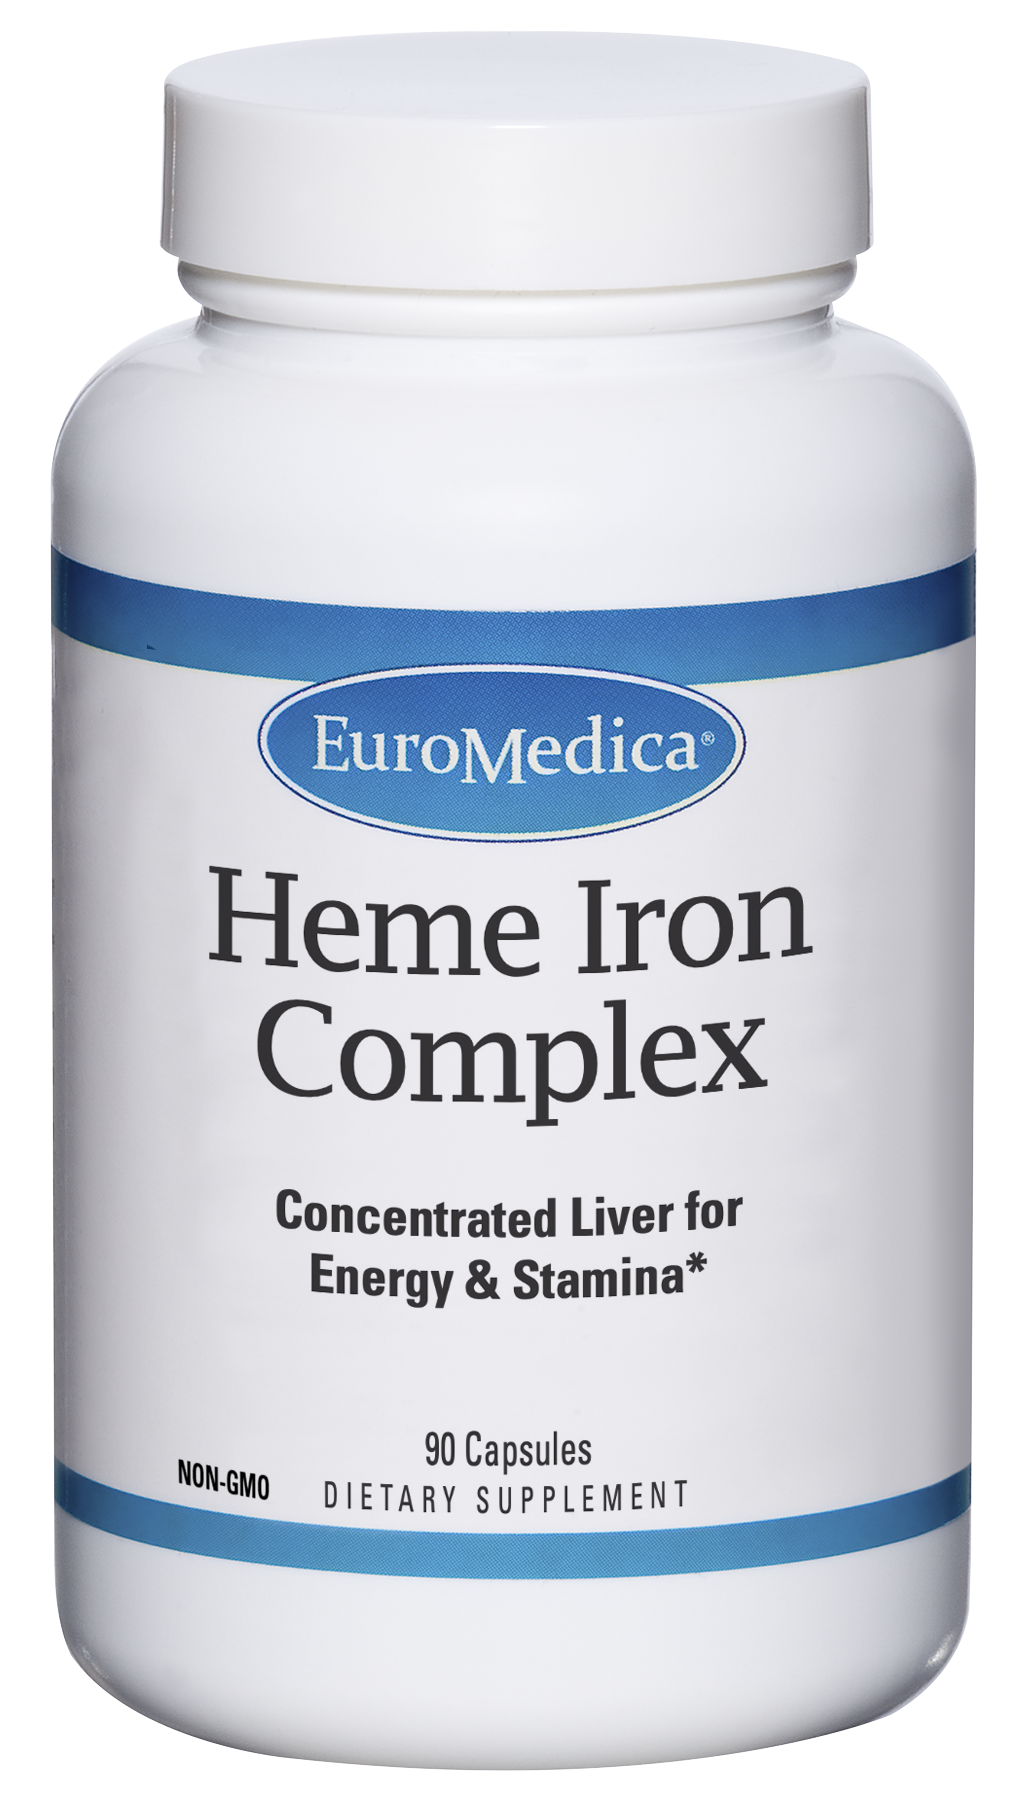 Heme Iron Complex bottle image